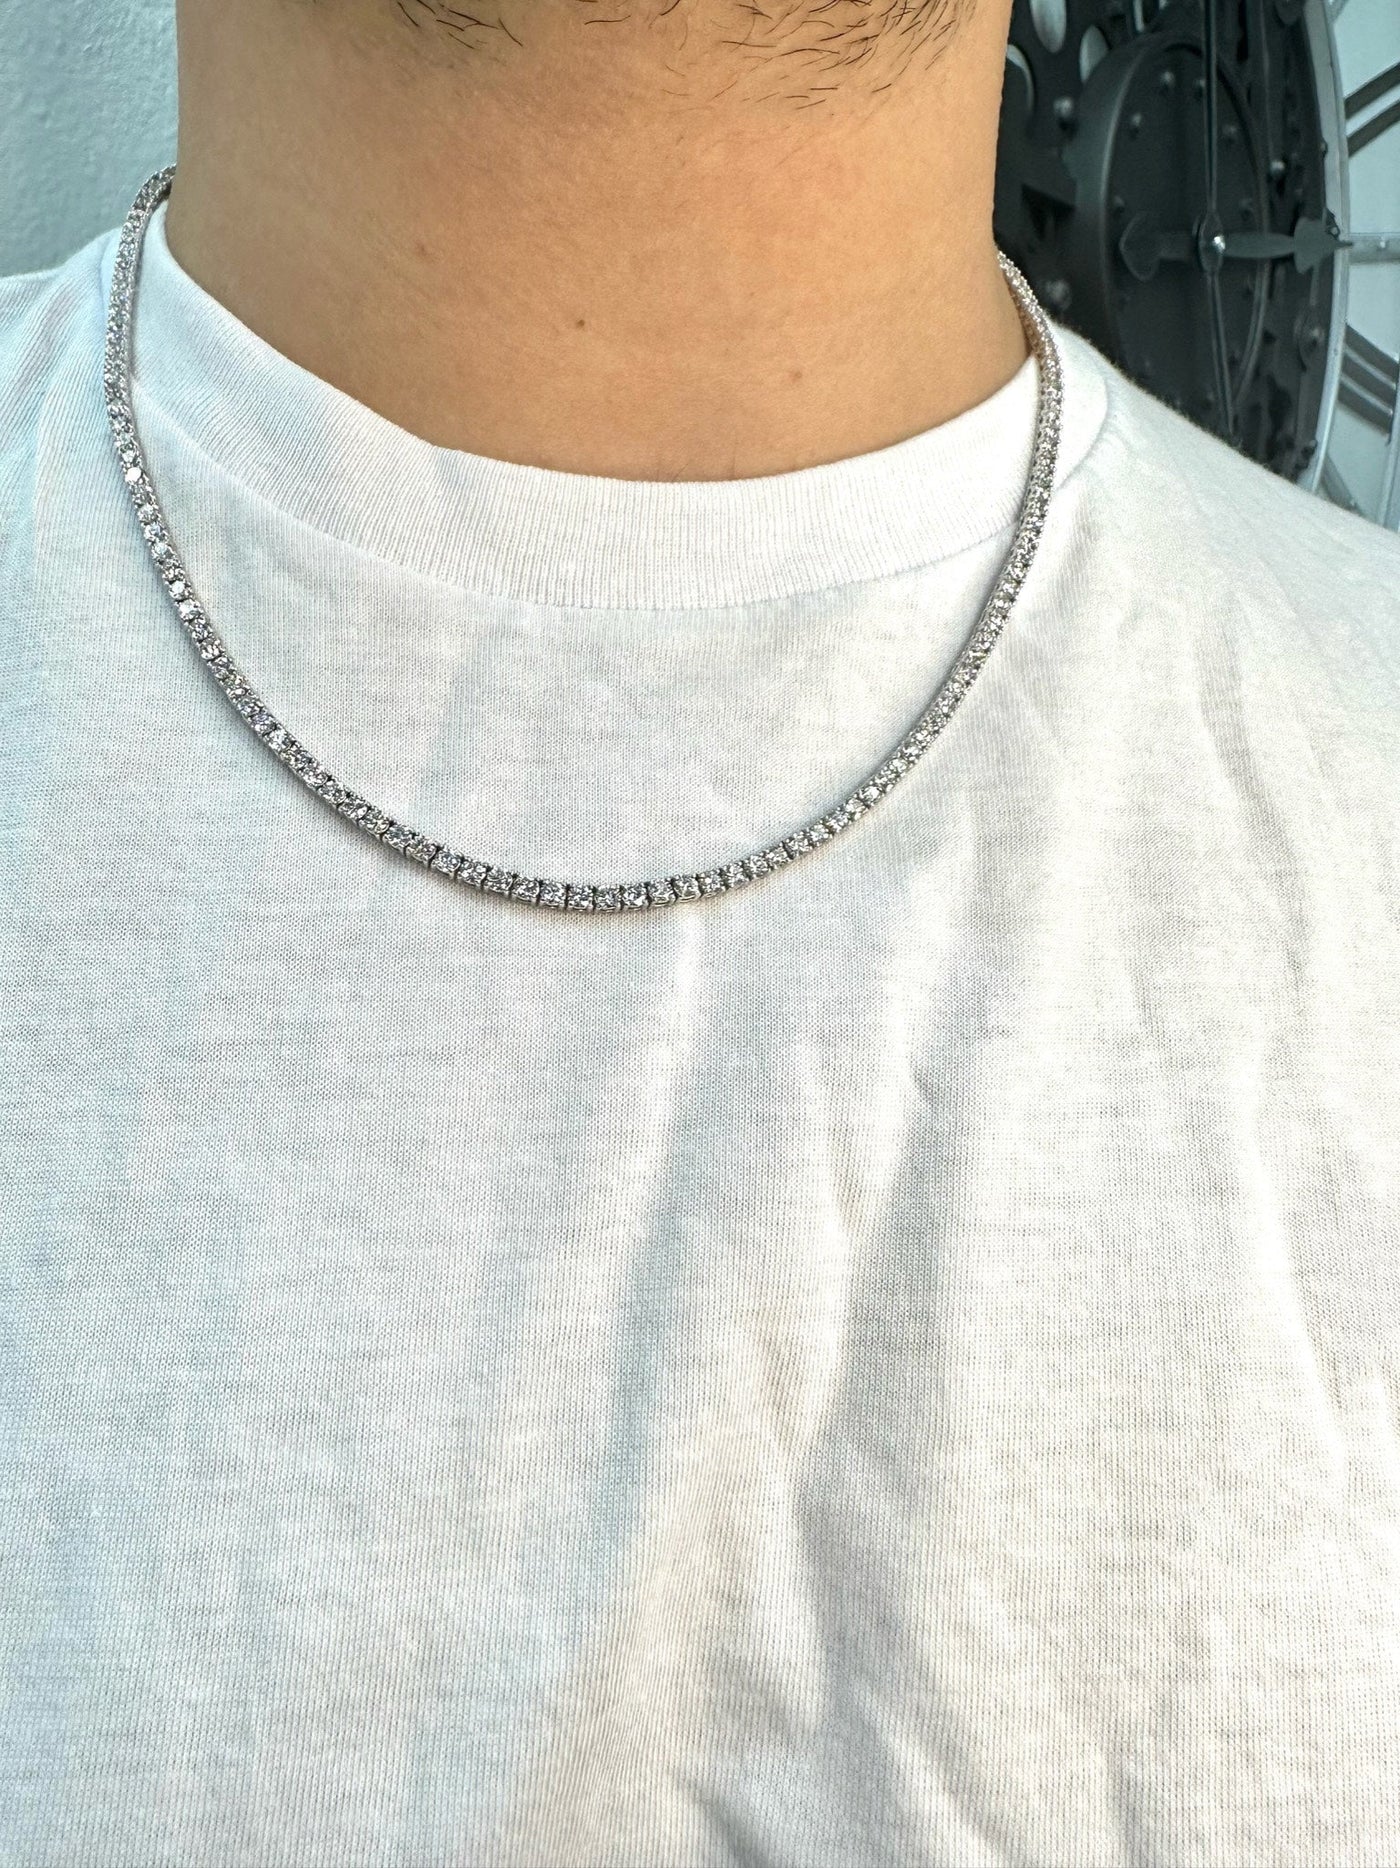 7 CT. T.W. Composite Diamond Tennis Necklace in 14K White Gold - 16